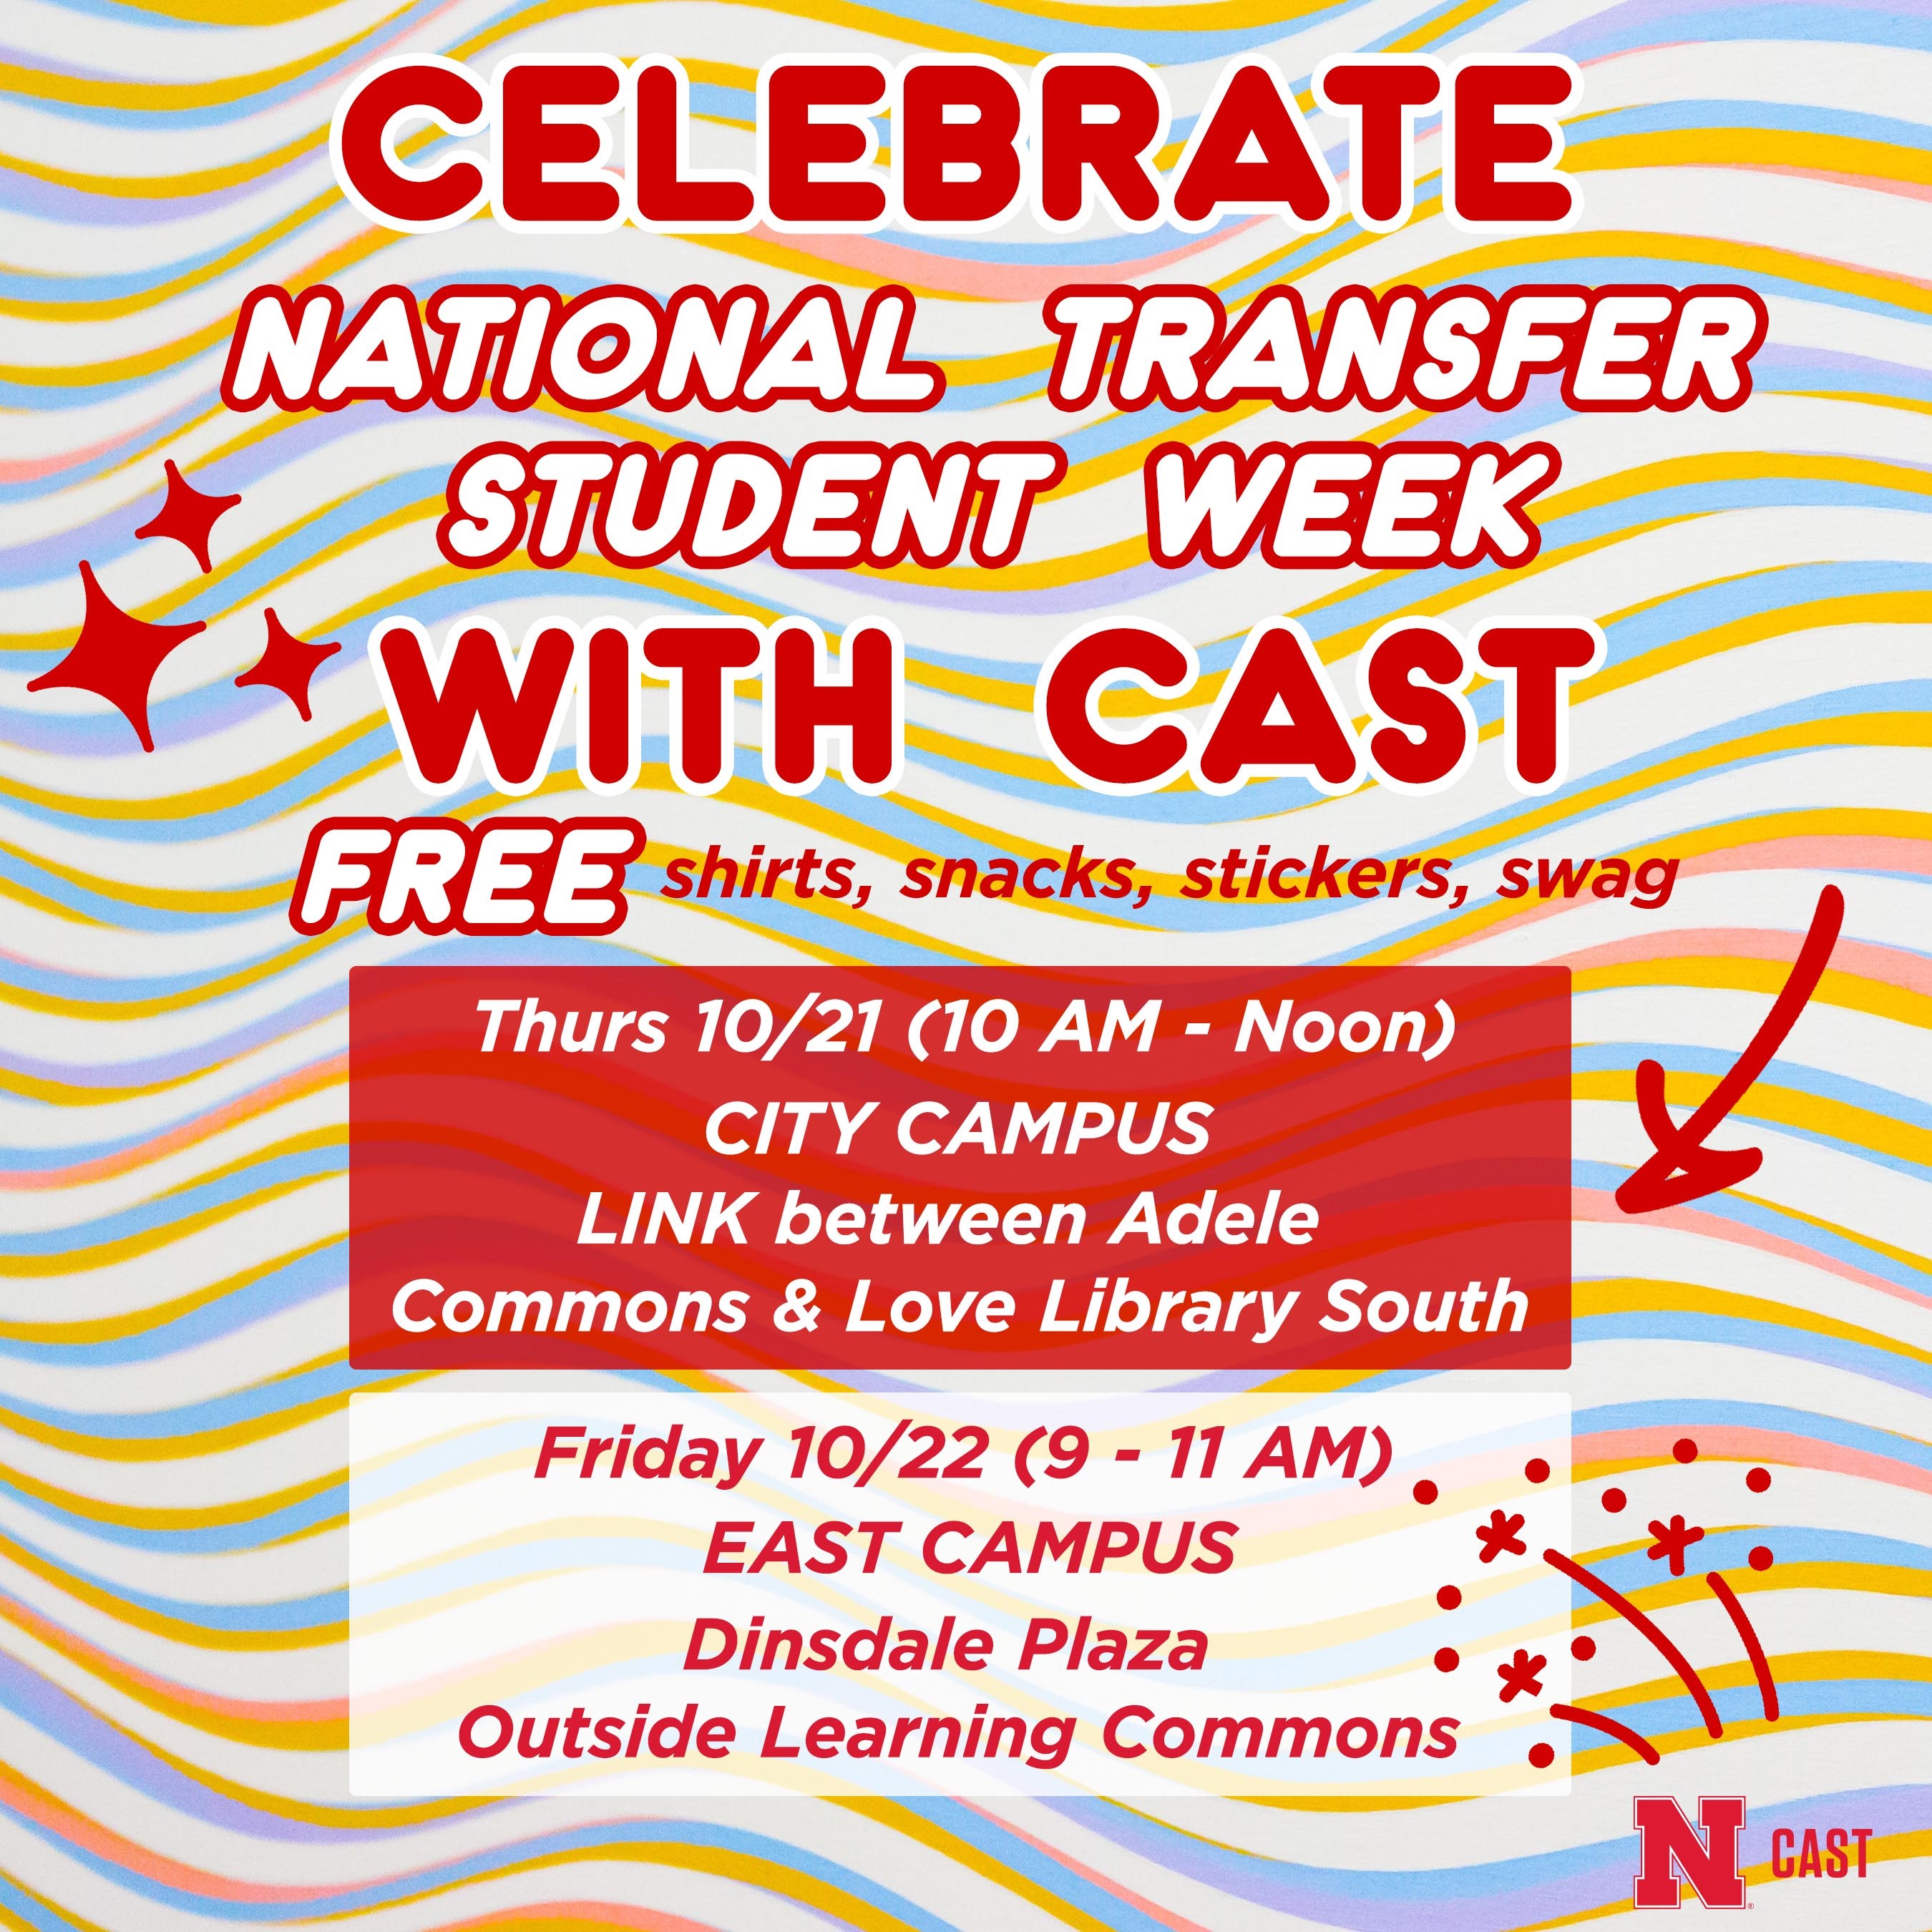 Celebrating National Transfer Student Week